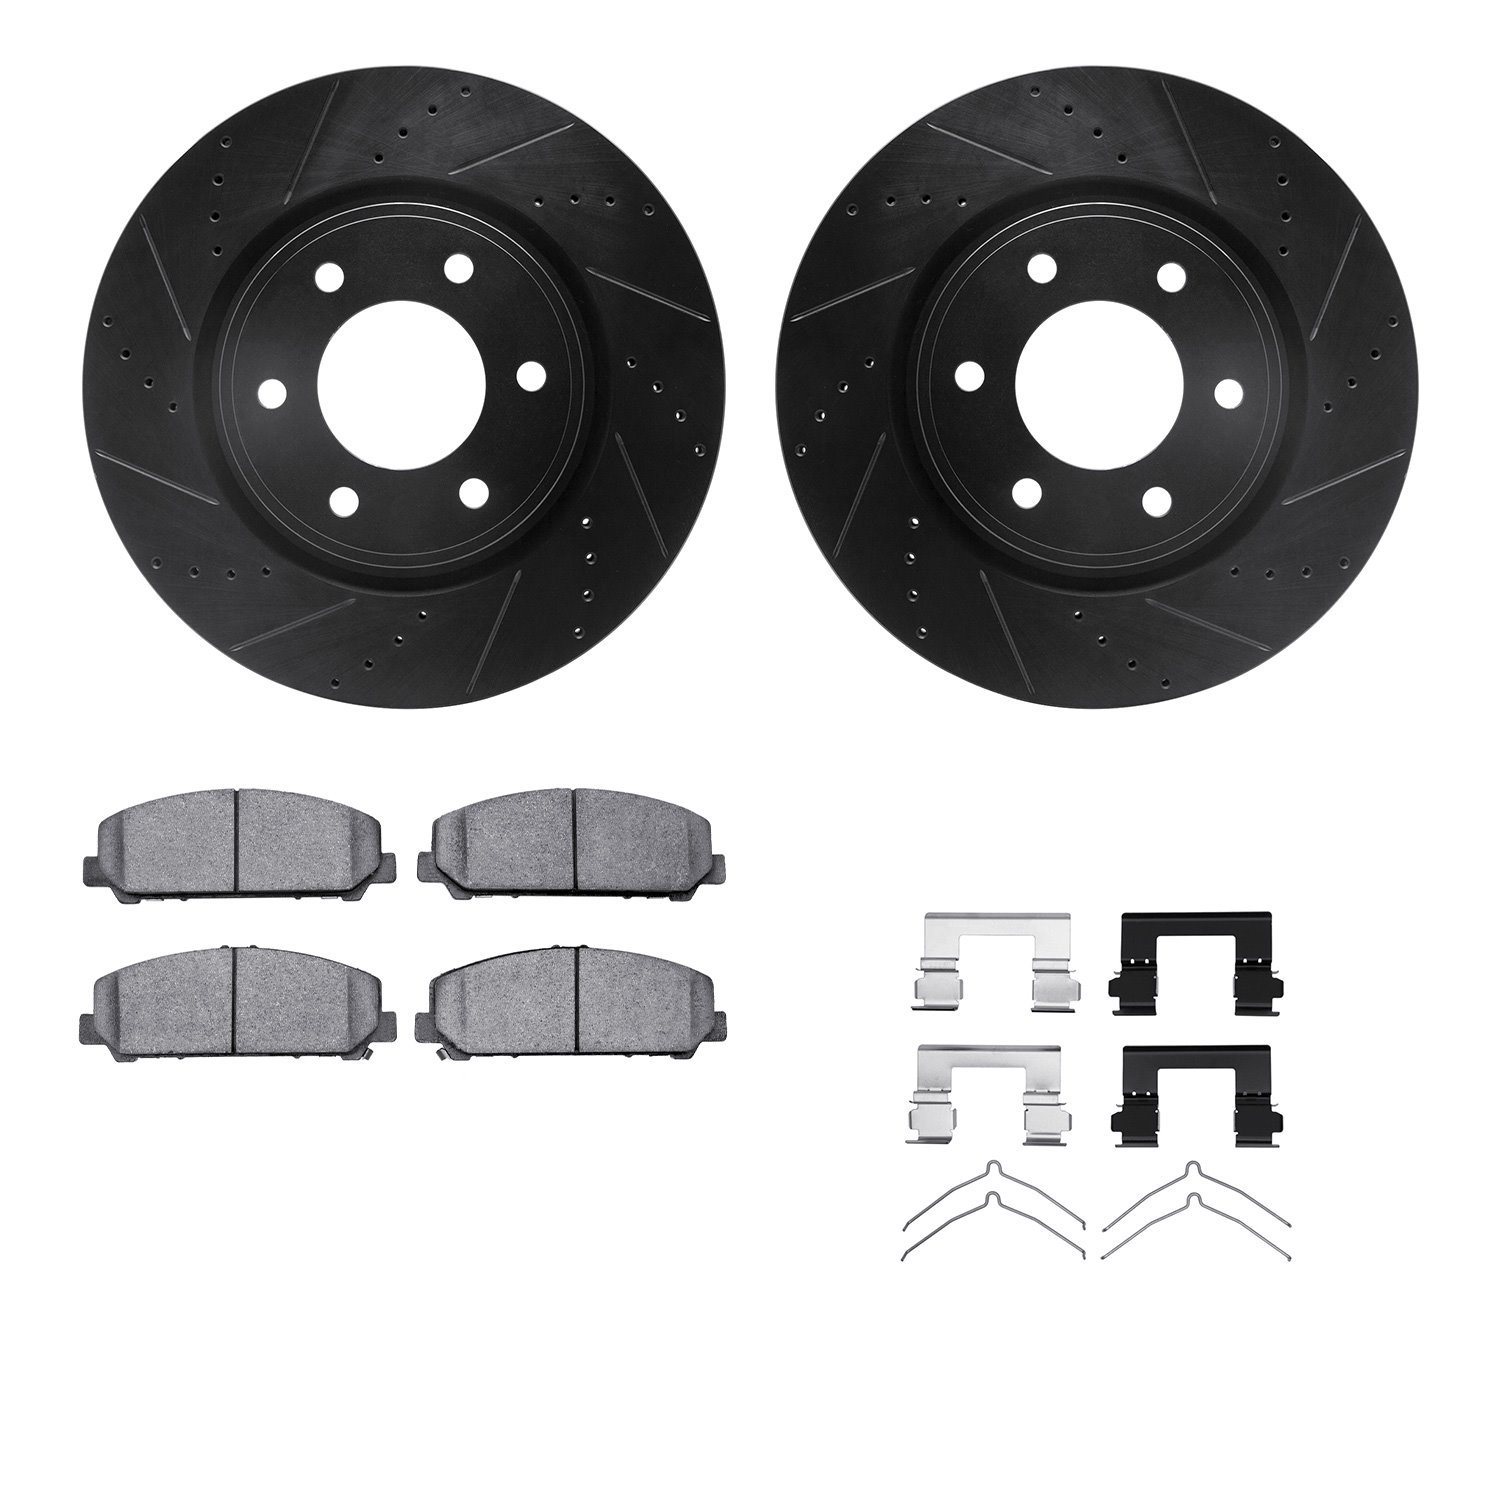 8312-68018 Drilled/Slotted Brake Rotors with 3000-Series Ceramic Brake Pads Kit & Hardware [Black], Fits Select Infiniti/Nissan,